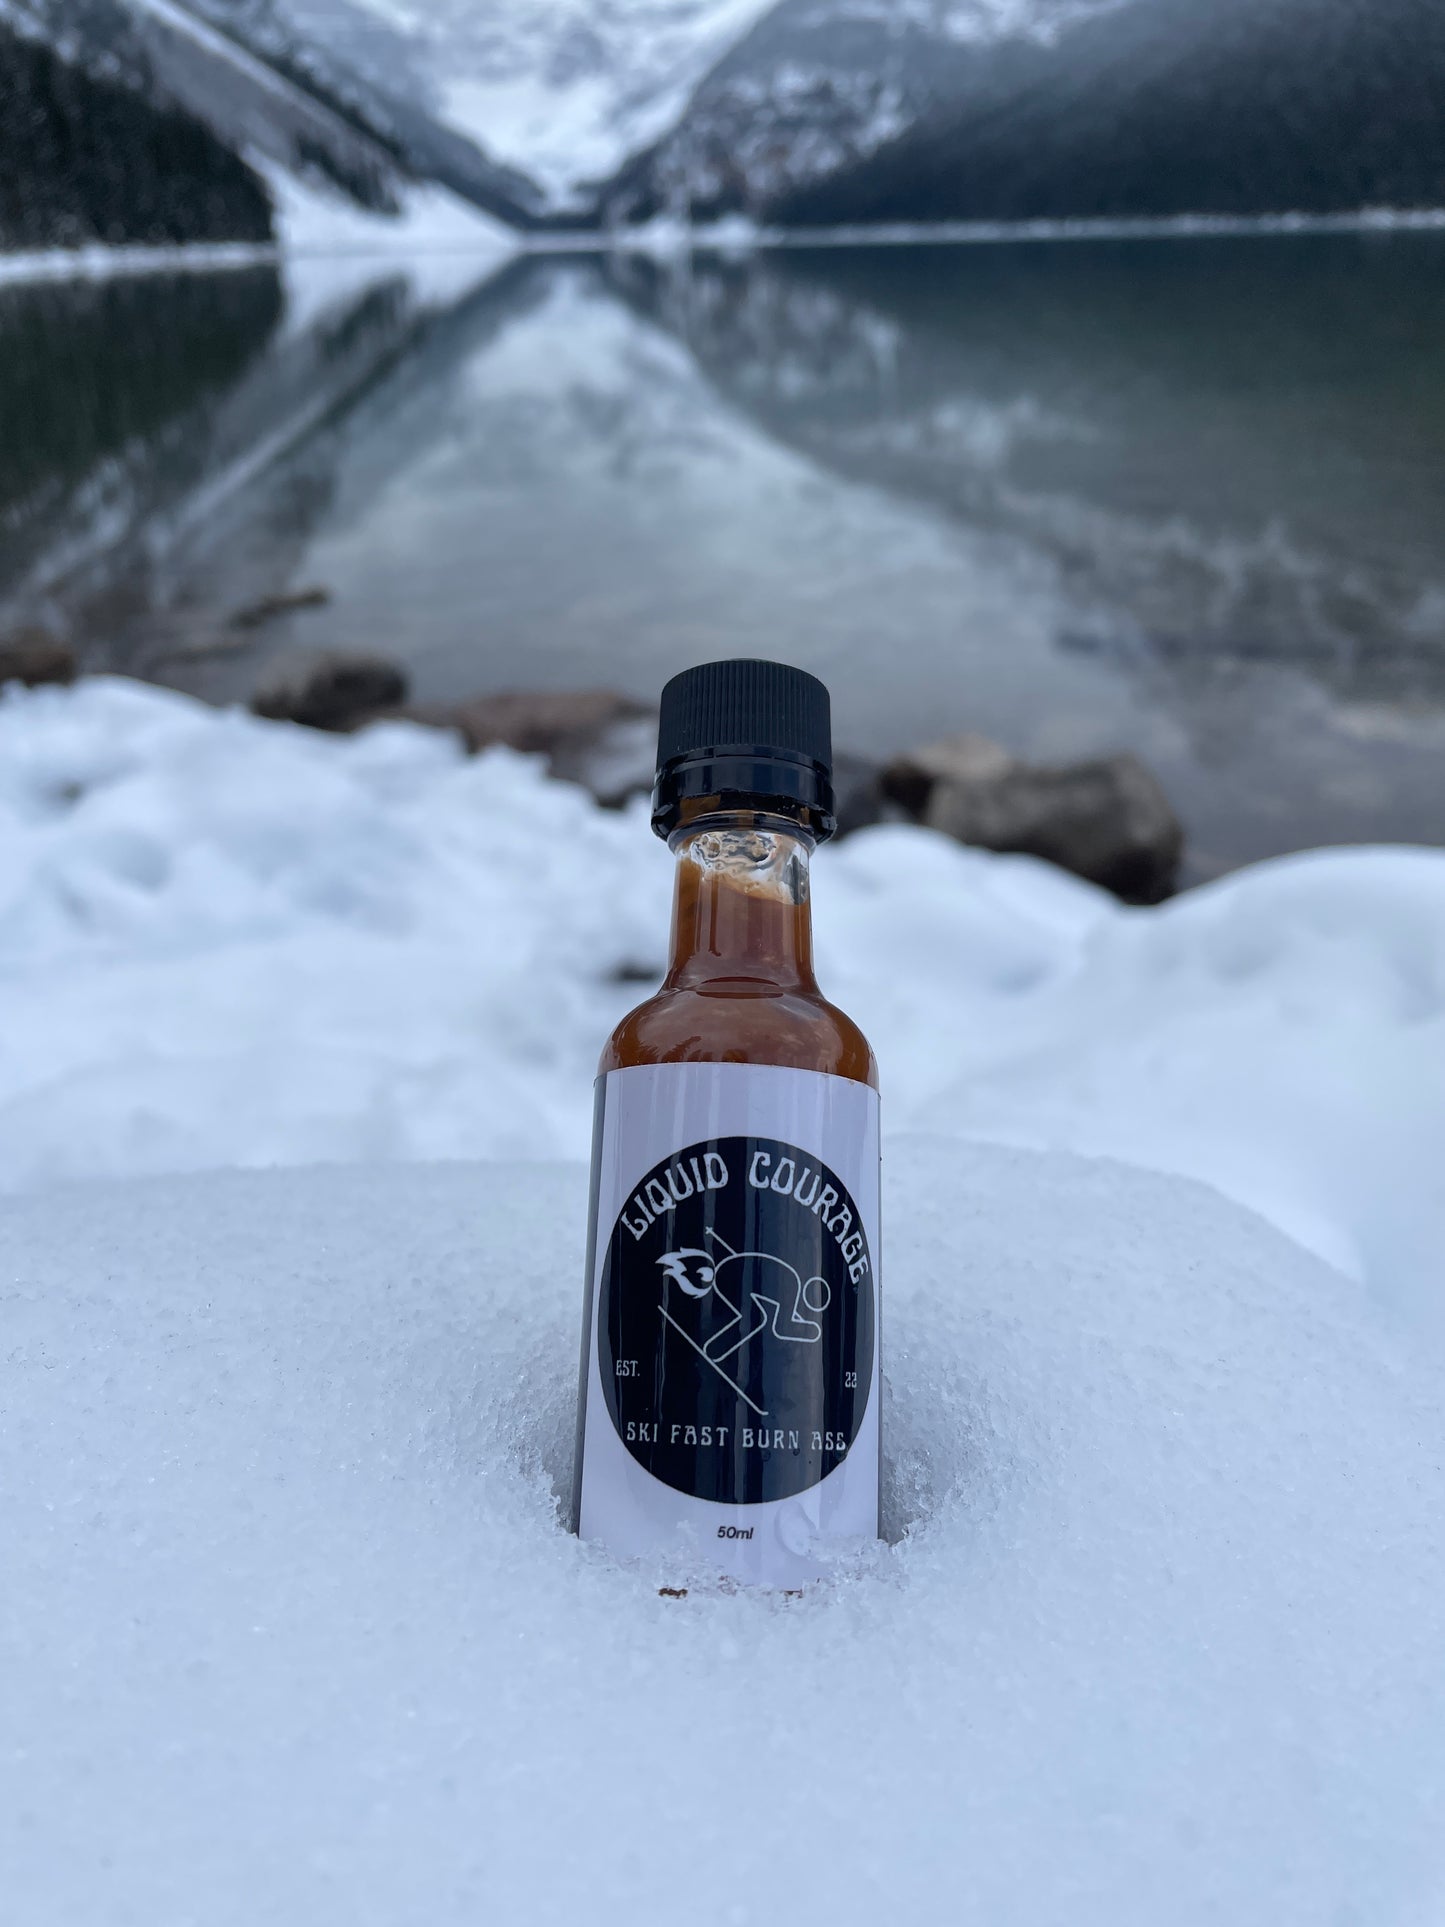 Liquid Courage "Ski Fast Burn Ass" Tropical Ski Sauce